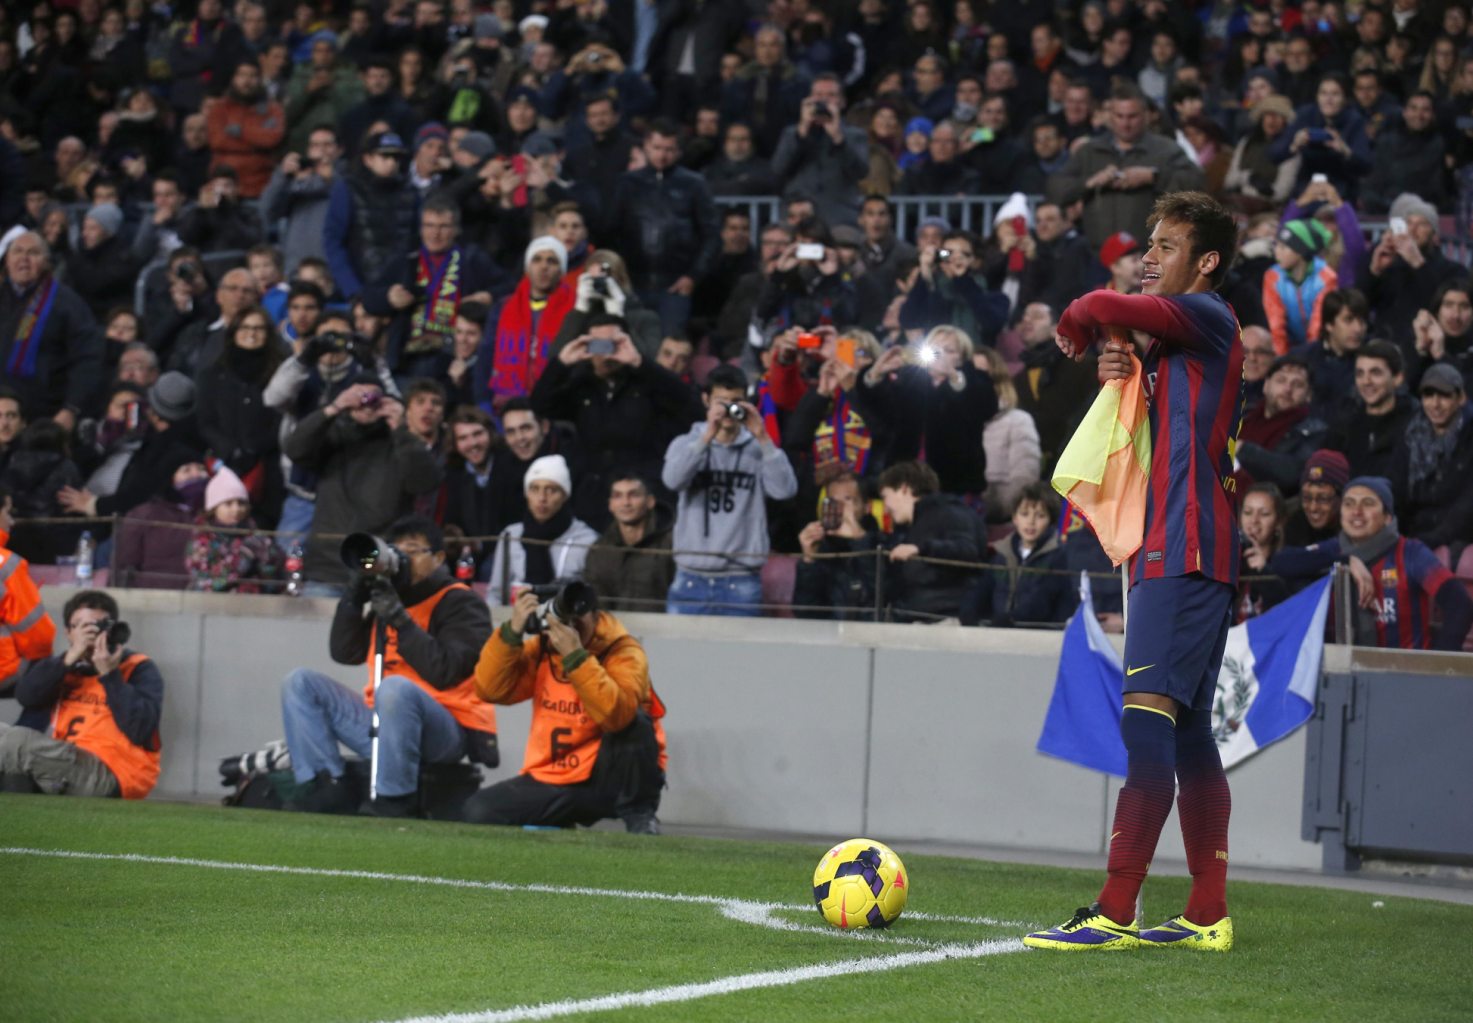 Neymar playing with the corner kick flag